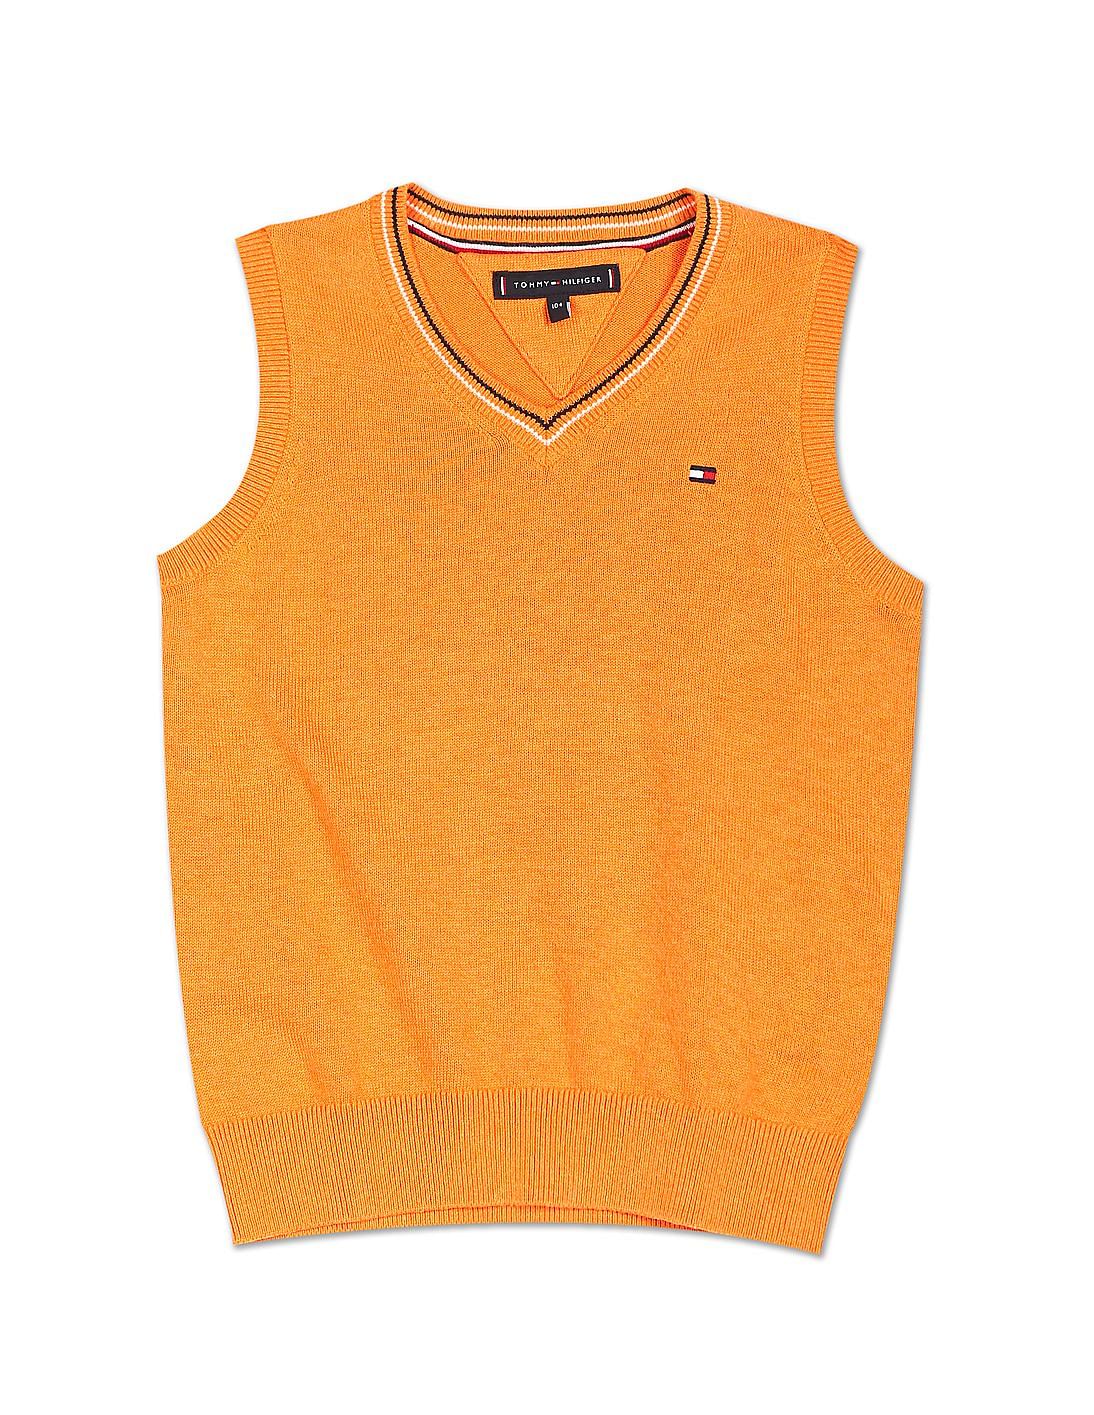 Pullover Tommy Hilfiger Boys Sleeveless V-Neck Sweater Vest Kids School Uniform Clothes